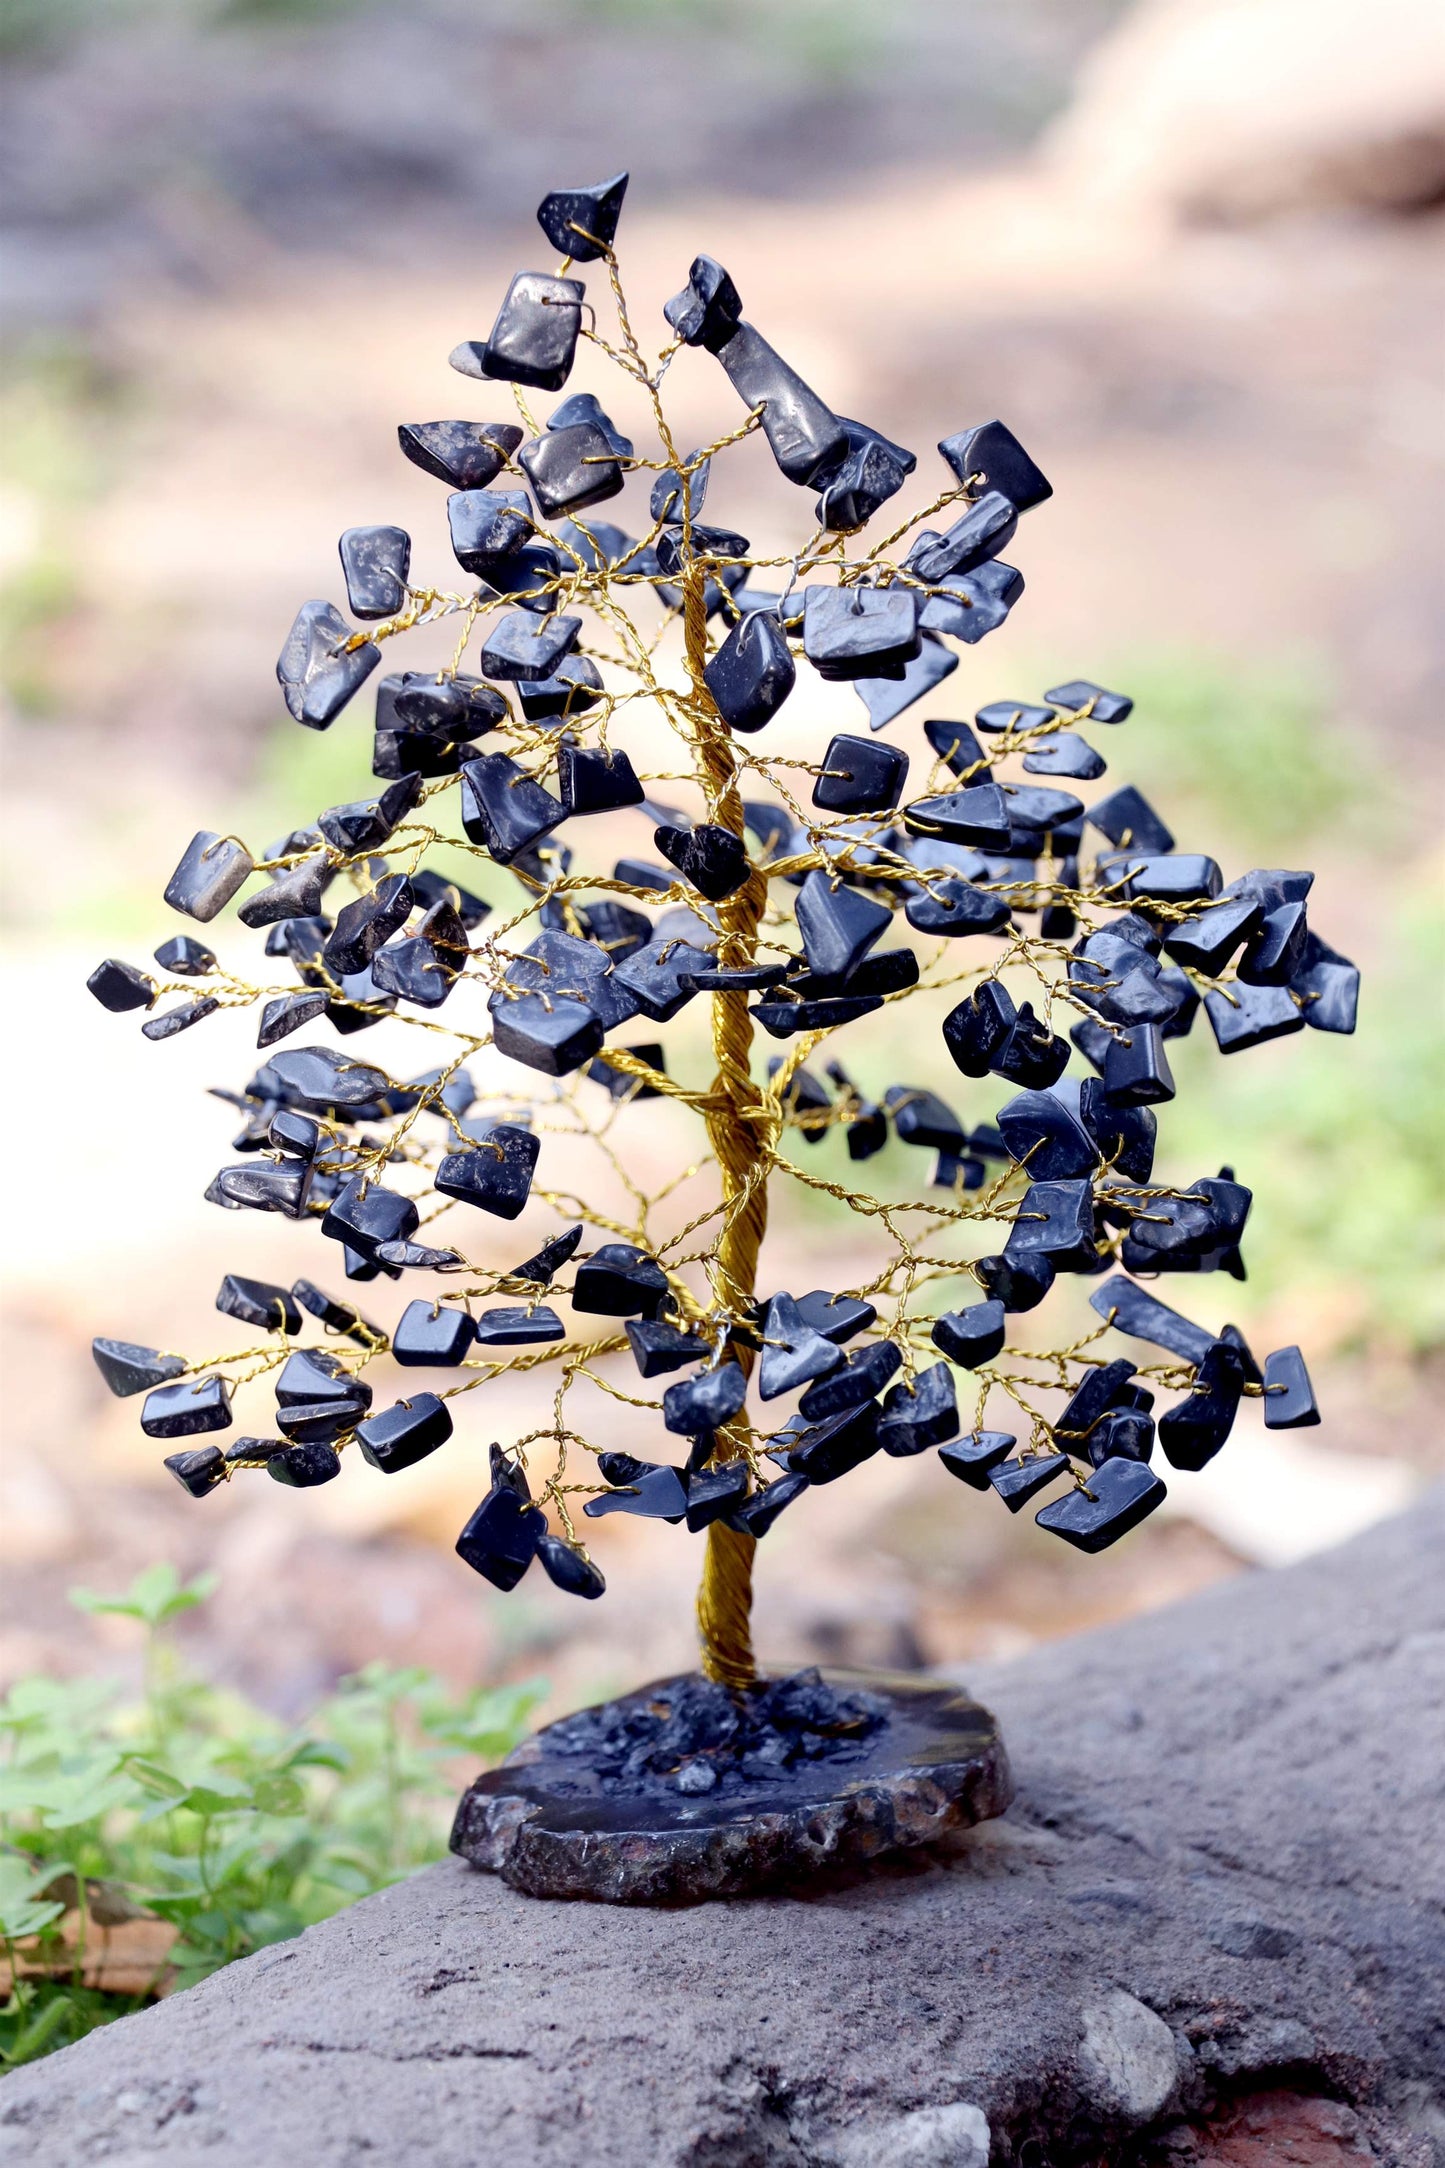 Black Tourmaline Gemstone Tree of Life (Geode Agate Slice Base)